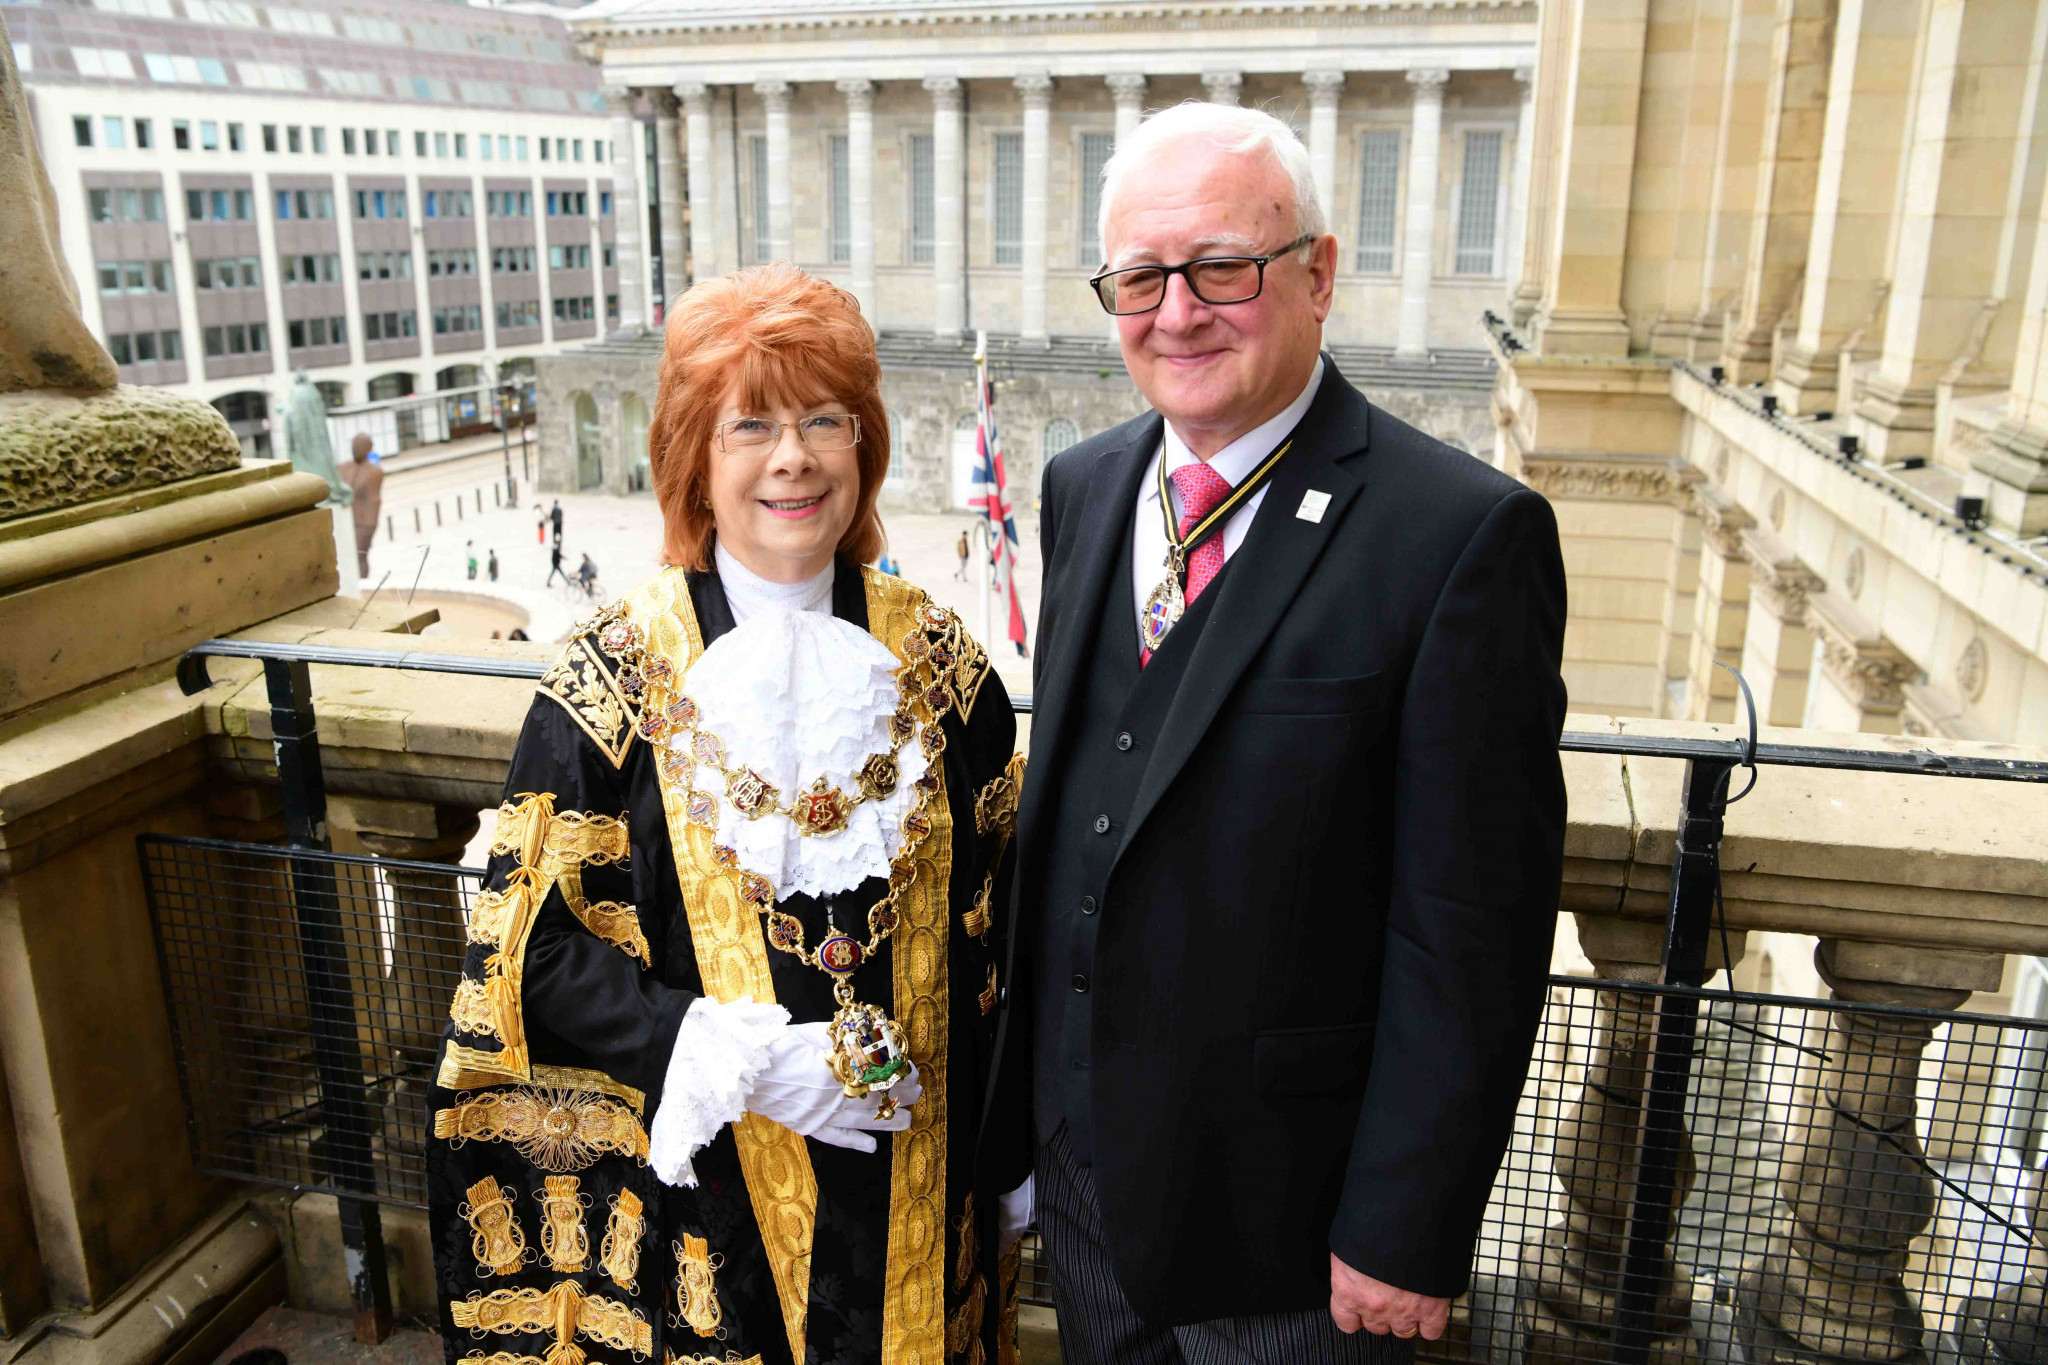 Councilor Maureen Cornish, left, is the new Lord Mayor of Birmingham ©Birmingham City Council